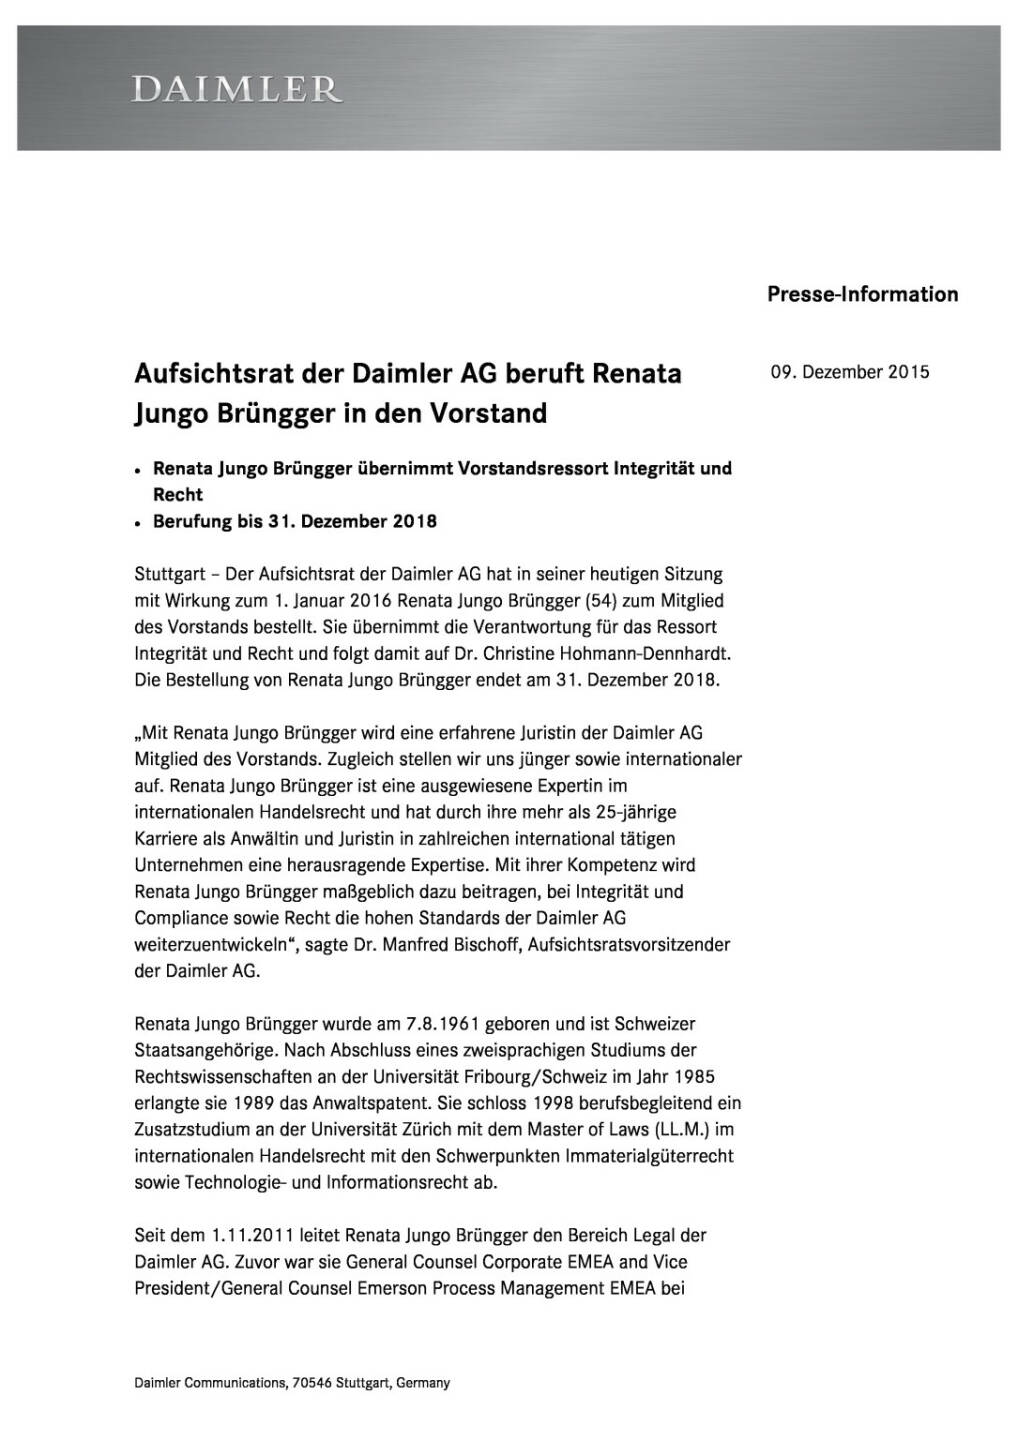 Daimler AG beruft Renata Jungo Brüngger in den Vorstand, Seite 1/2, komplettes Dokument unter http://boerse-social.com/static/uploads/file_515_daimler_ag_beruft_renata_jungo_brungger_in_den_vorstand.pdf